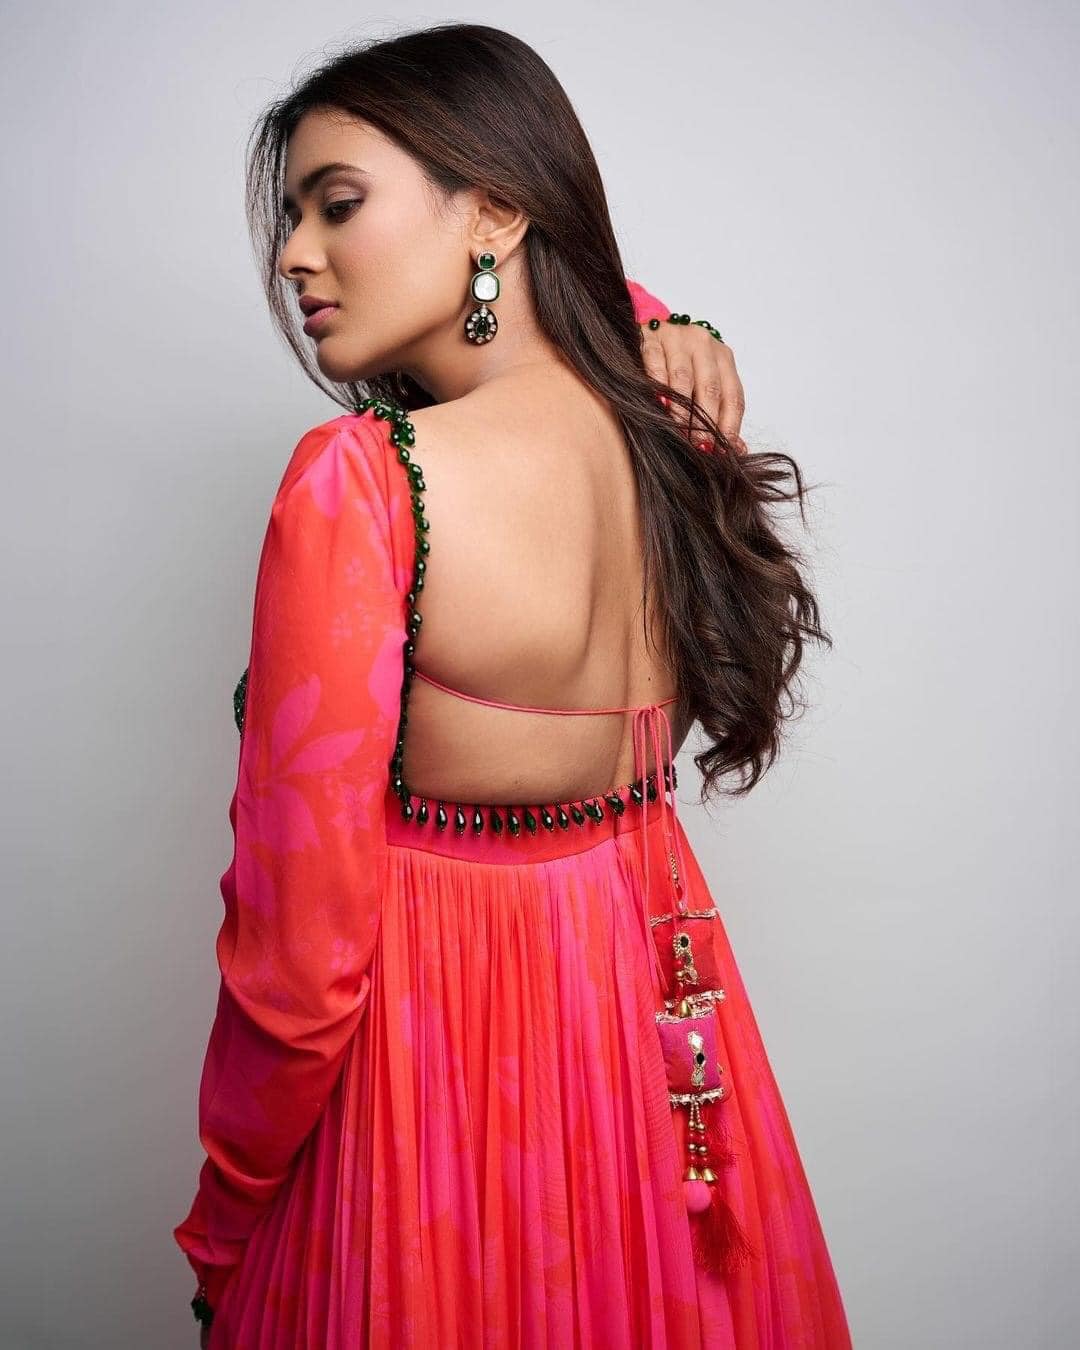 Glamorous beauty Hebah Patel